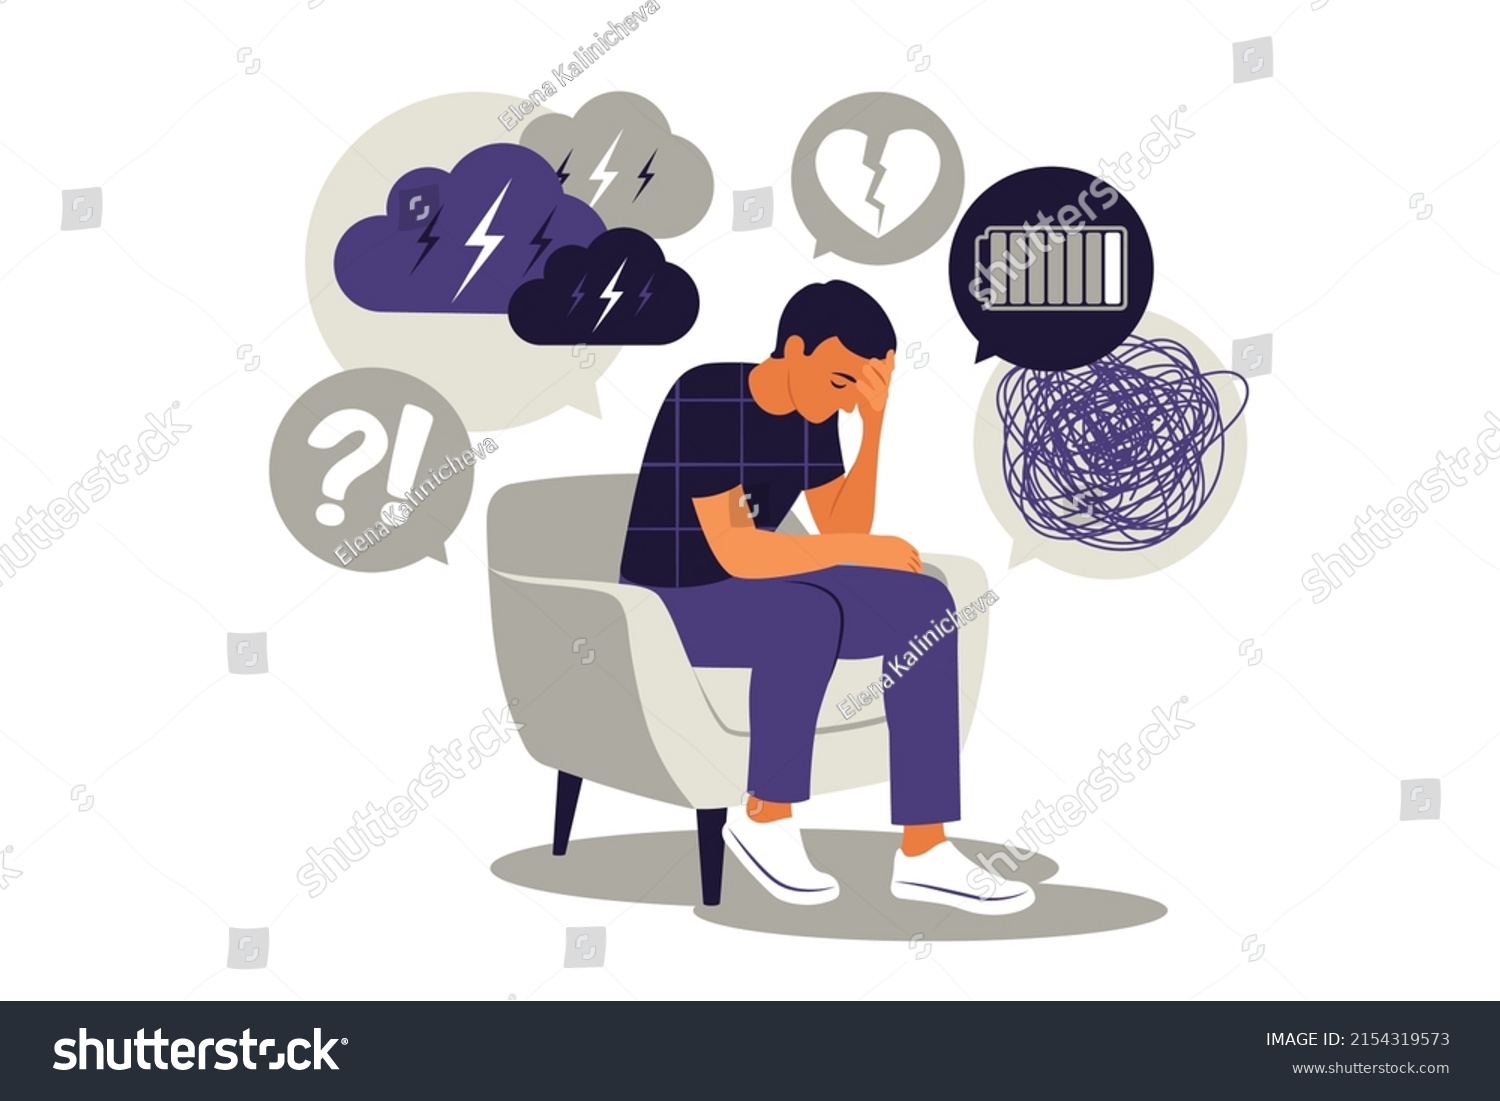 SVG of Depressed sad man thinking over problems. Bankruptcy, loss, crisis, burnout syndrome, relationship trouble concept. Vector illustration. Flat. svg